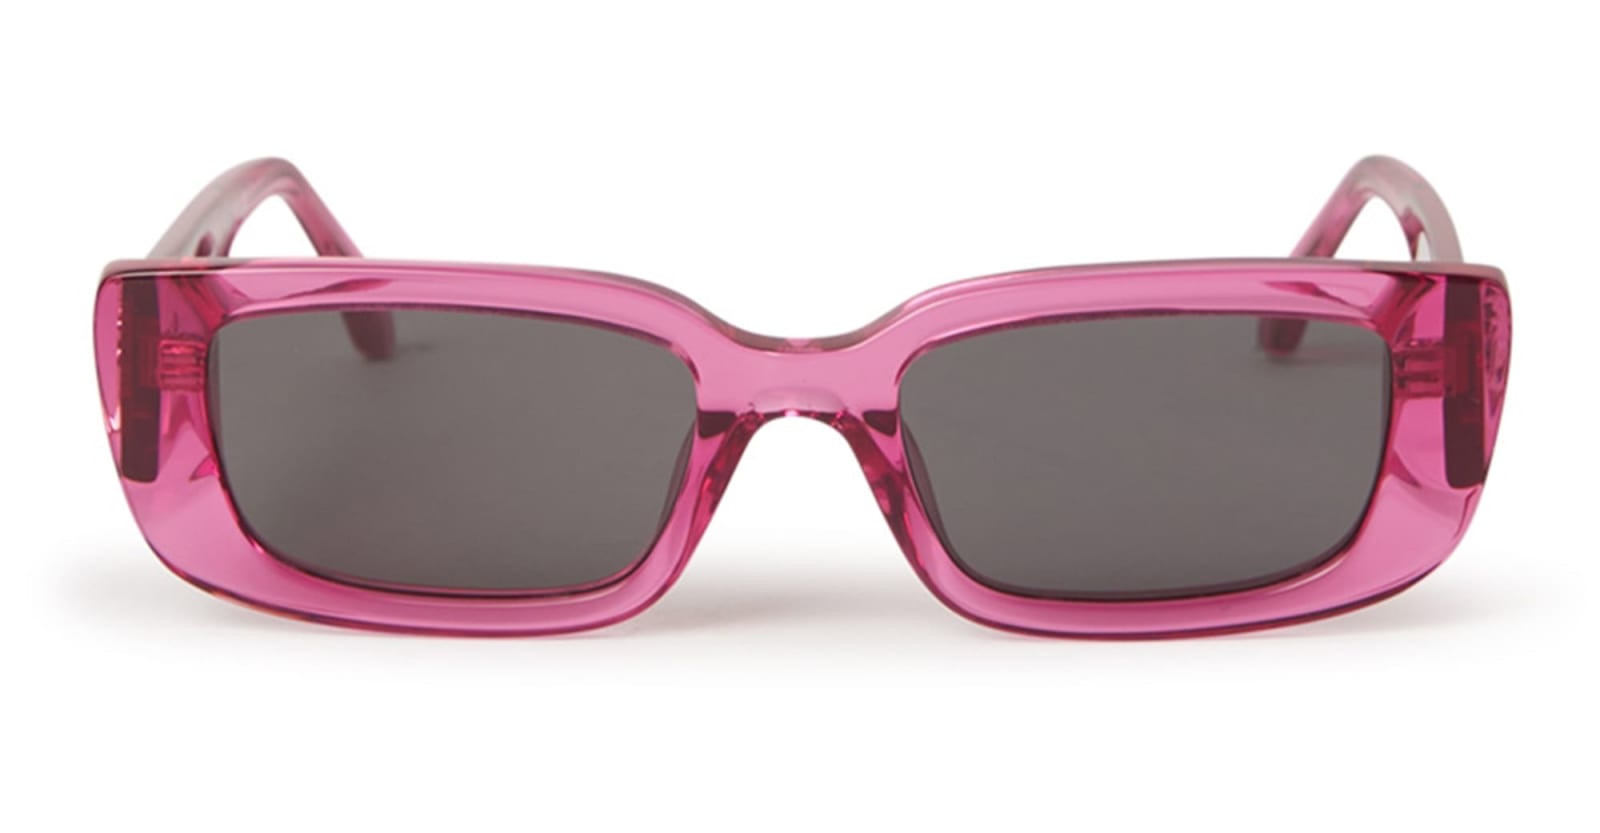 Yosemite - Pink Sunglasses